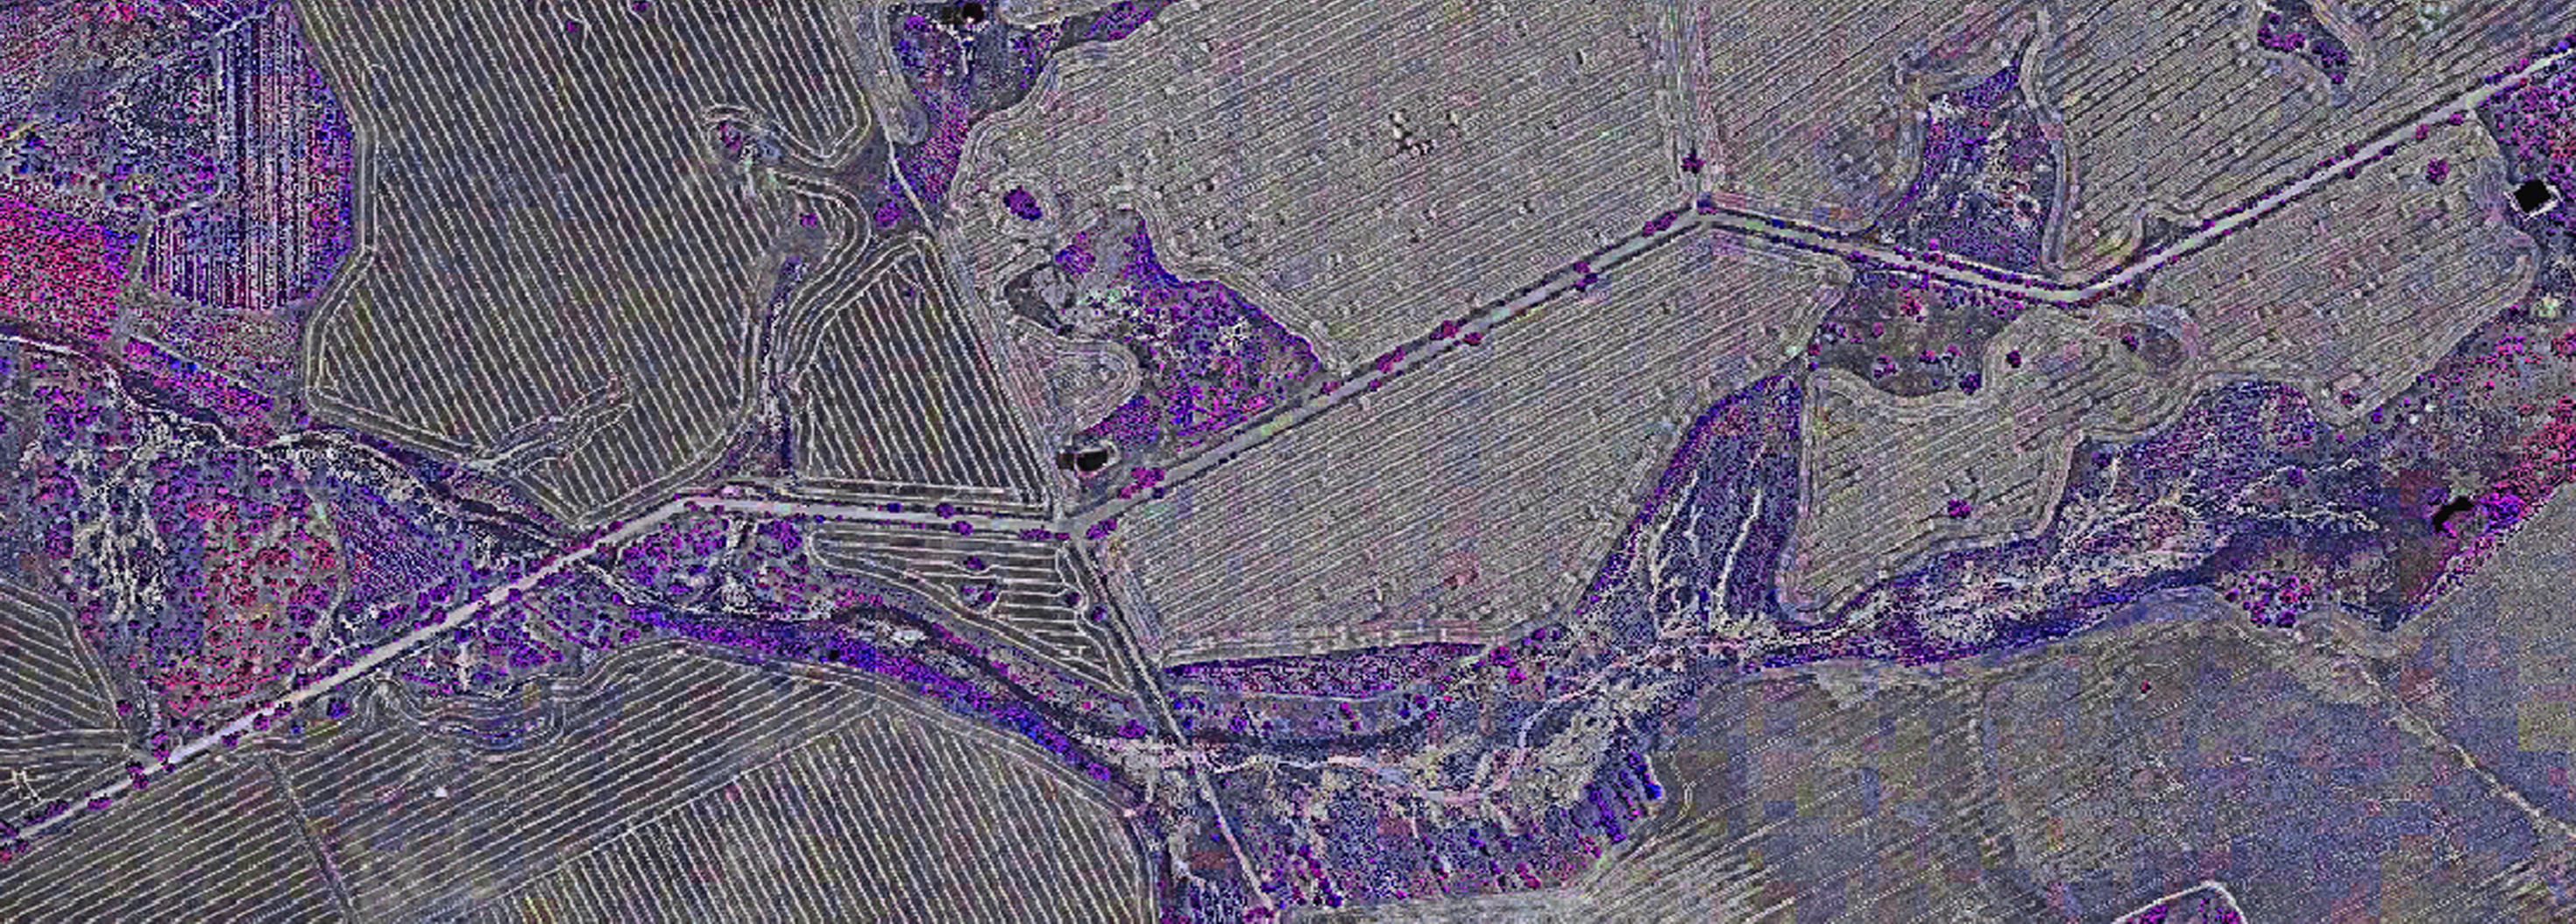 Normalised Difference Vegetation Index scan of farmland taken by Sensorem drone technology.